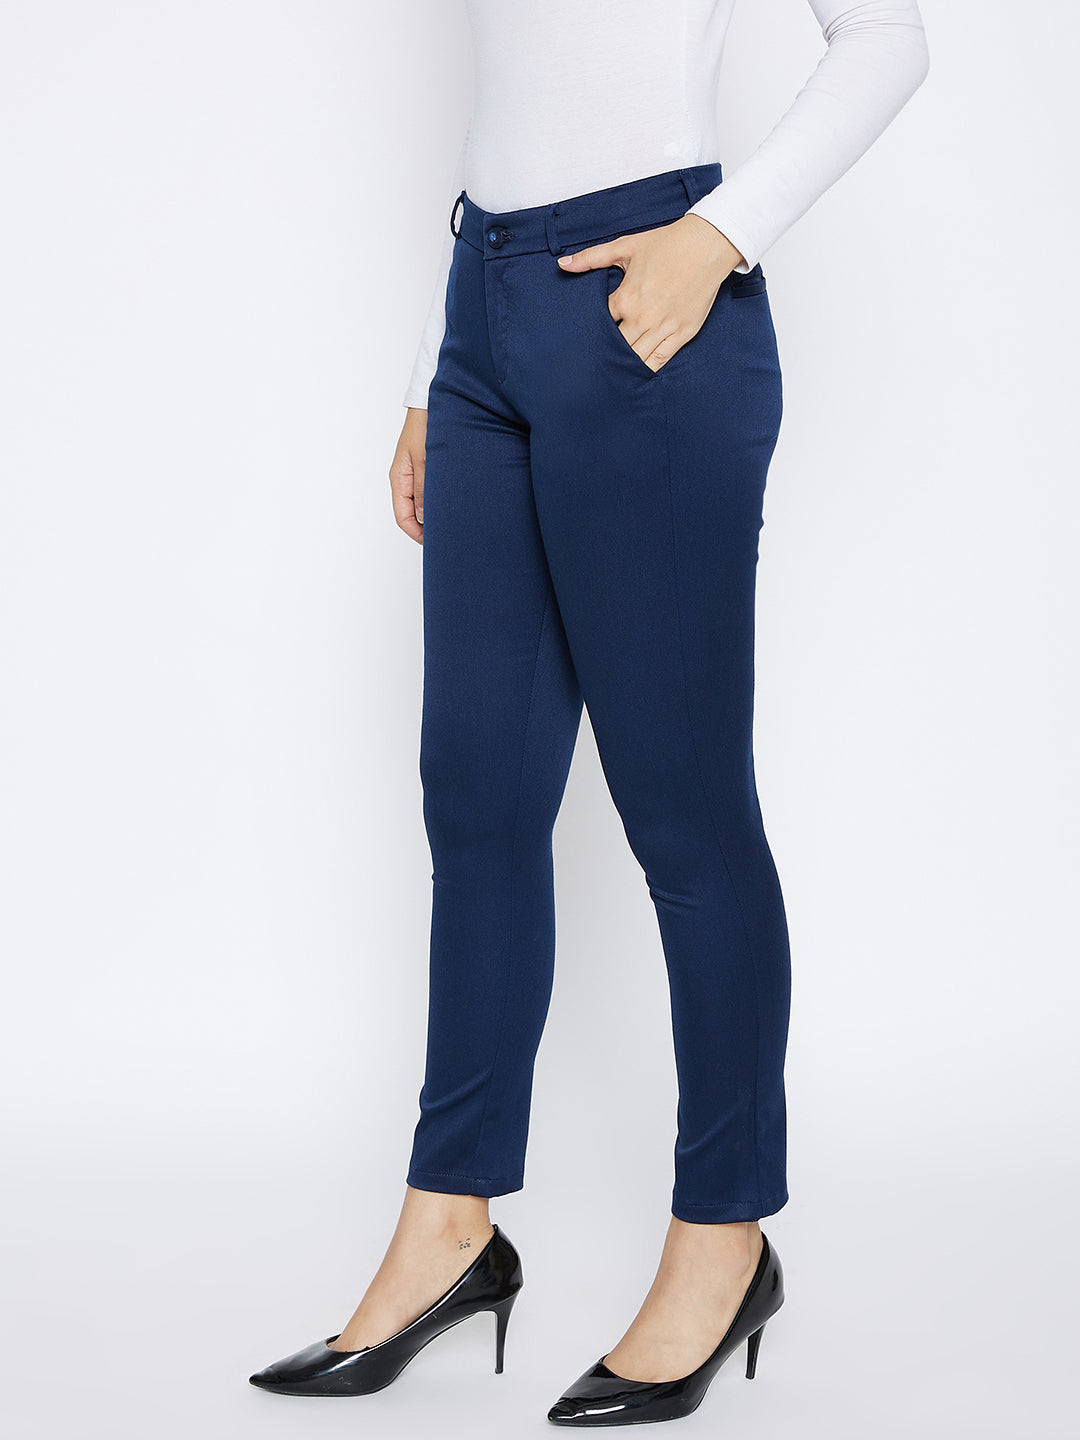 Navy Blue Slim Fit Trousers - Women Trousers